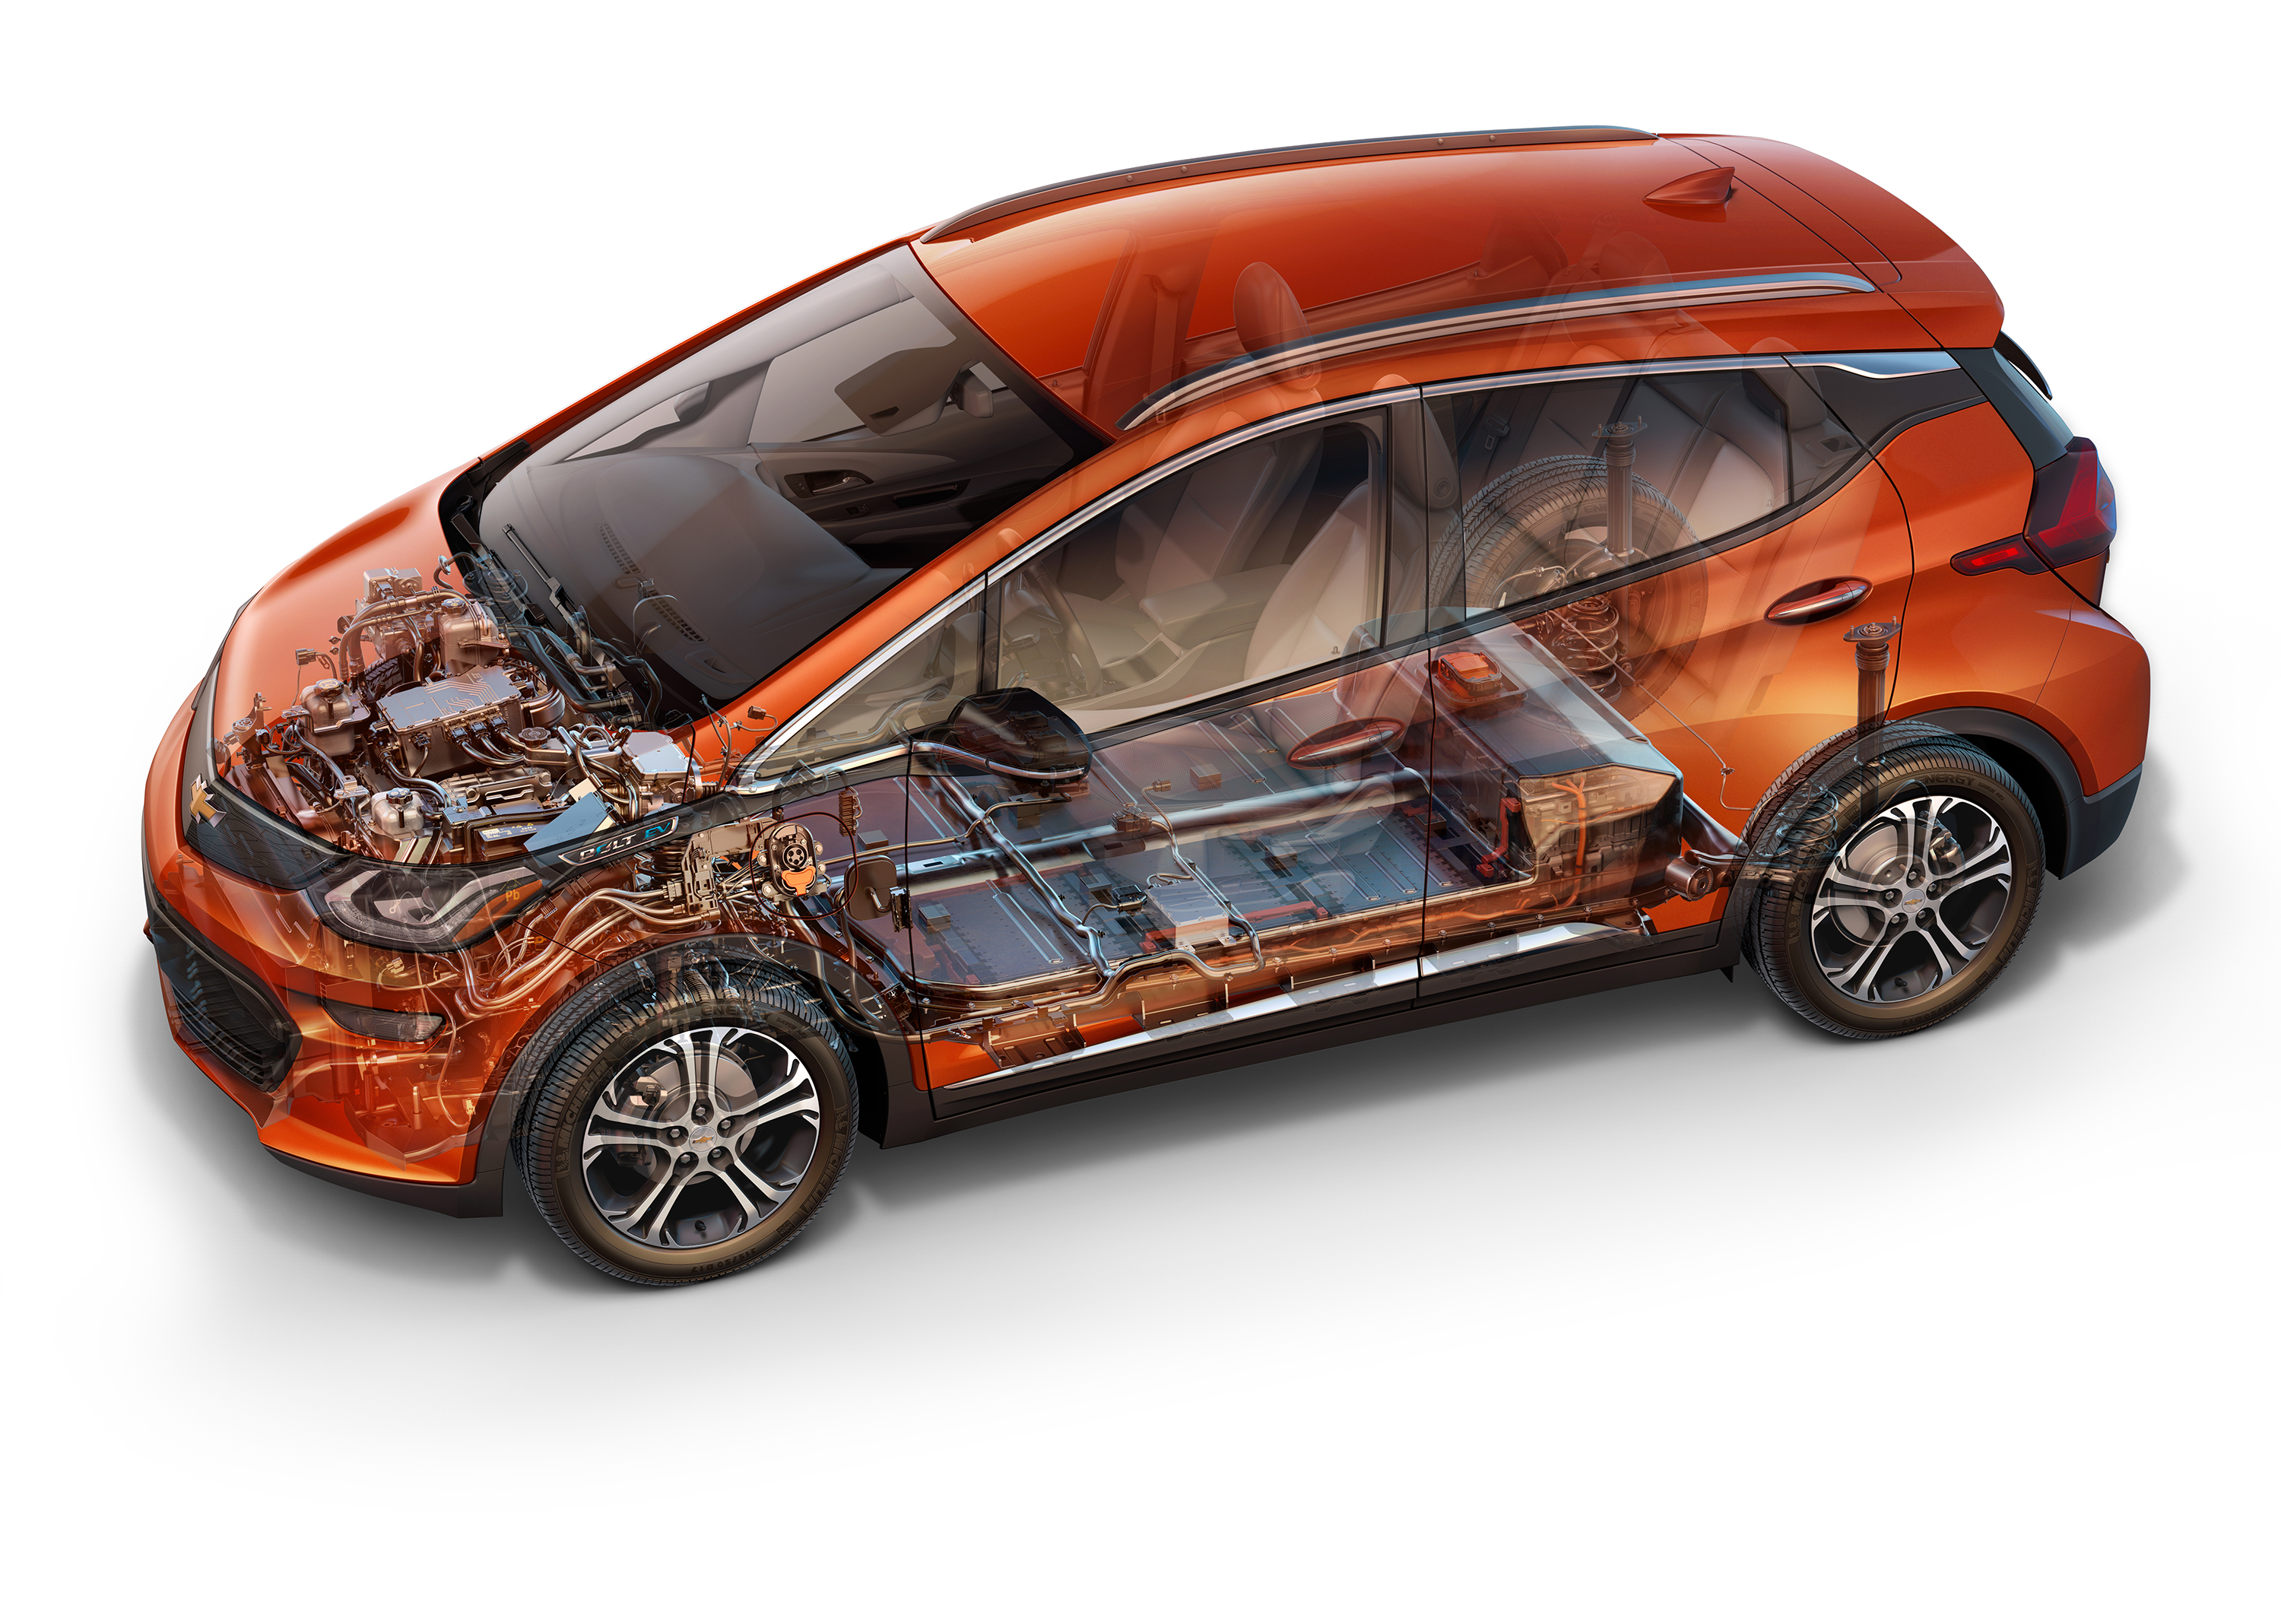 electric cars panasonic mits 1 6b to nevada tesla gigafactory wsj reports chevy bolt steel and aluminum